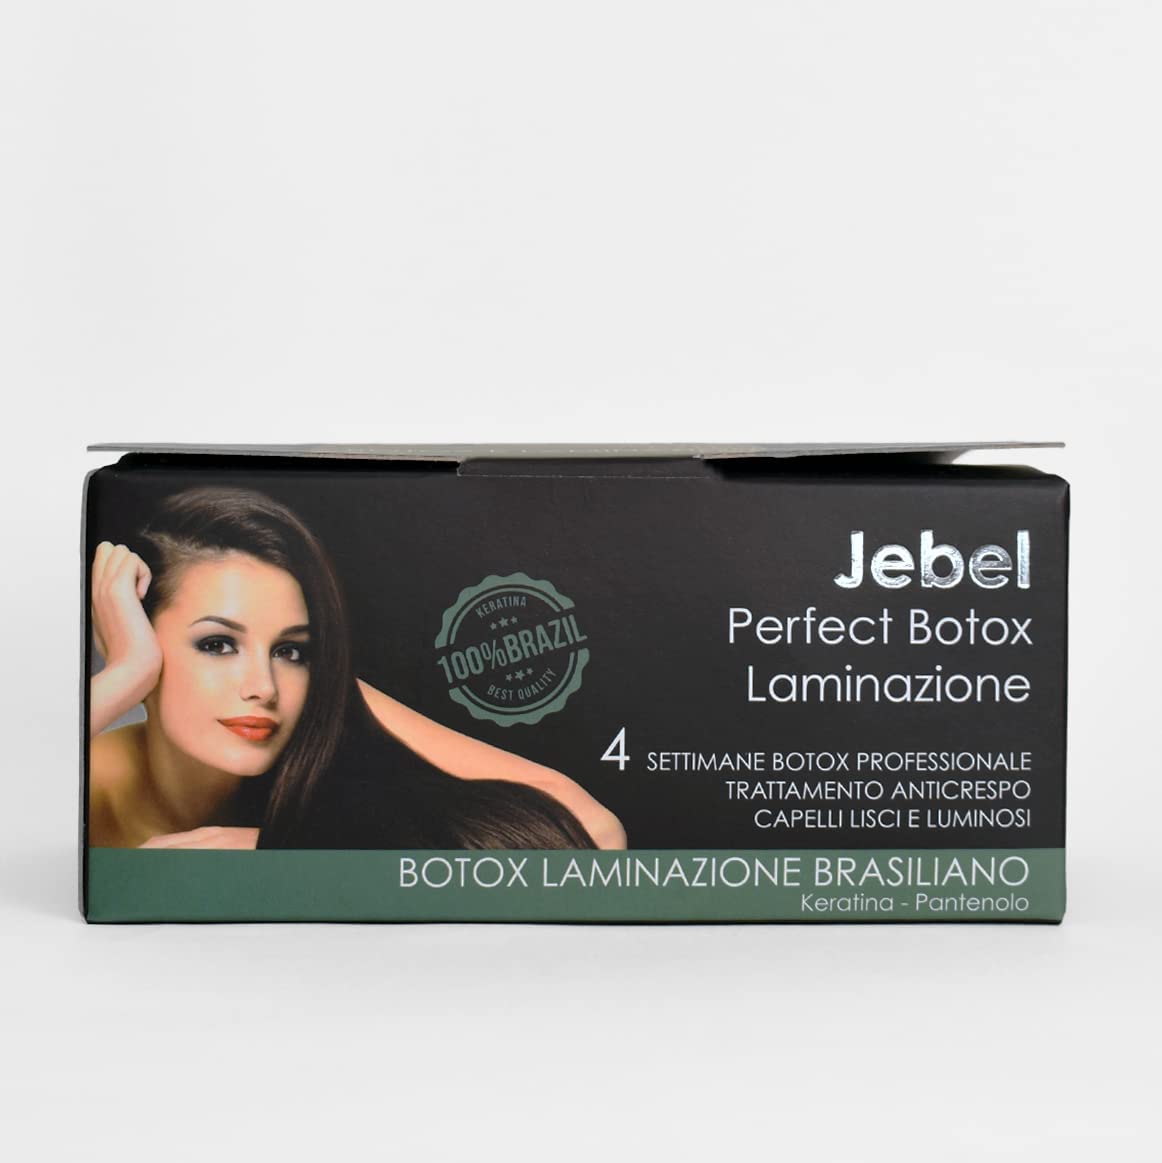 Kit botox laminazione brasiliano jebel